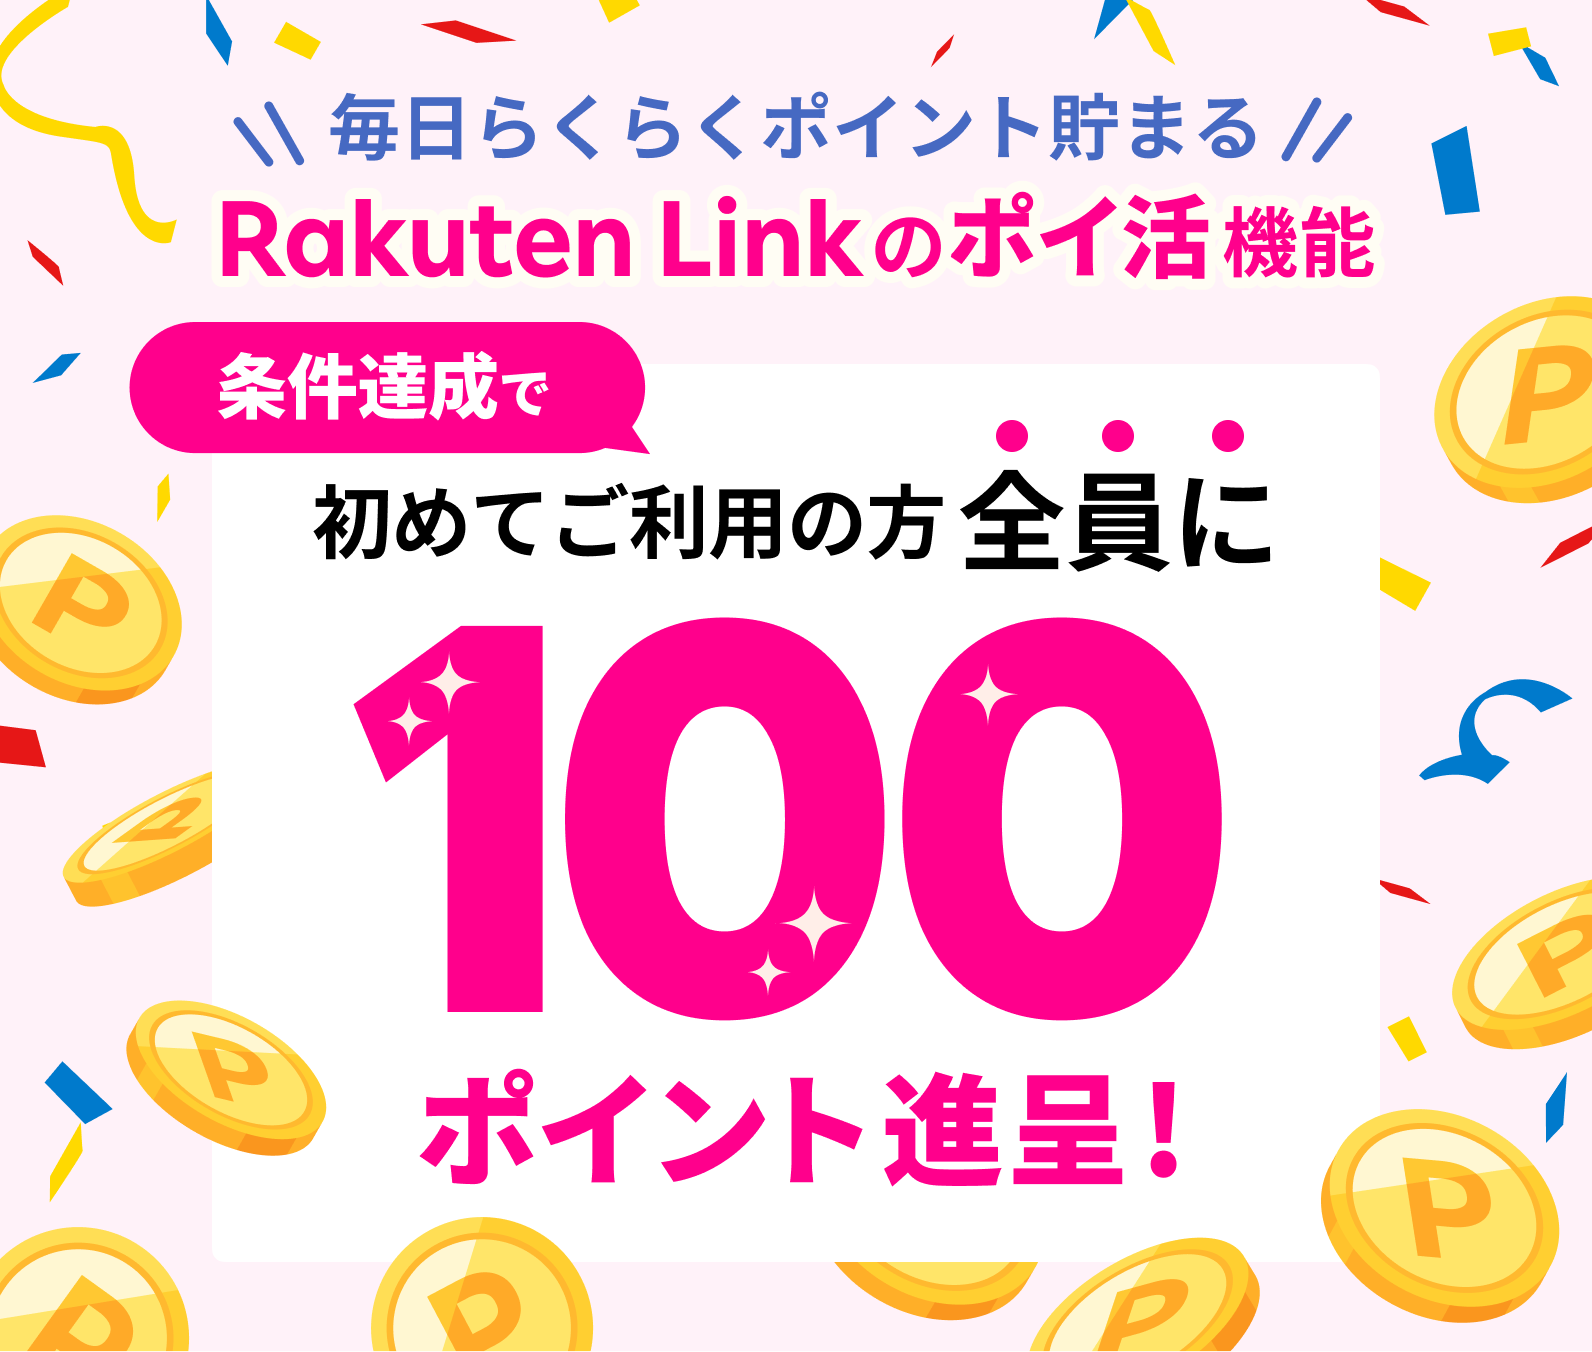 Rakuten Link のポイ活機能 条件達成で 初めてご利用の方全員に100ポイント進呈！ ※要エントリー